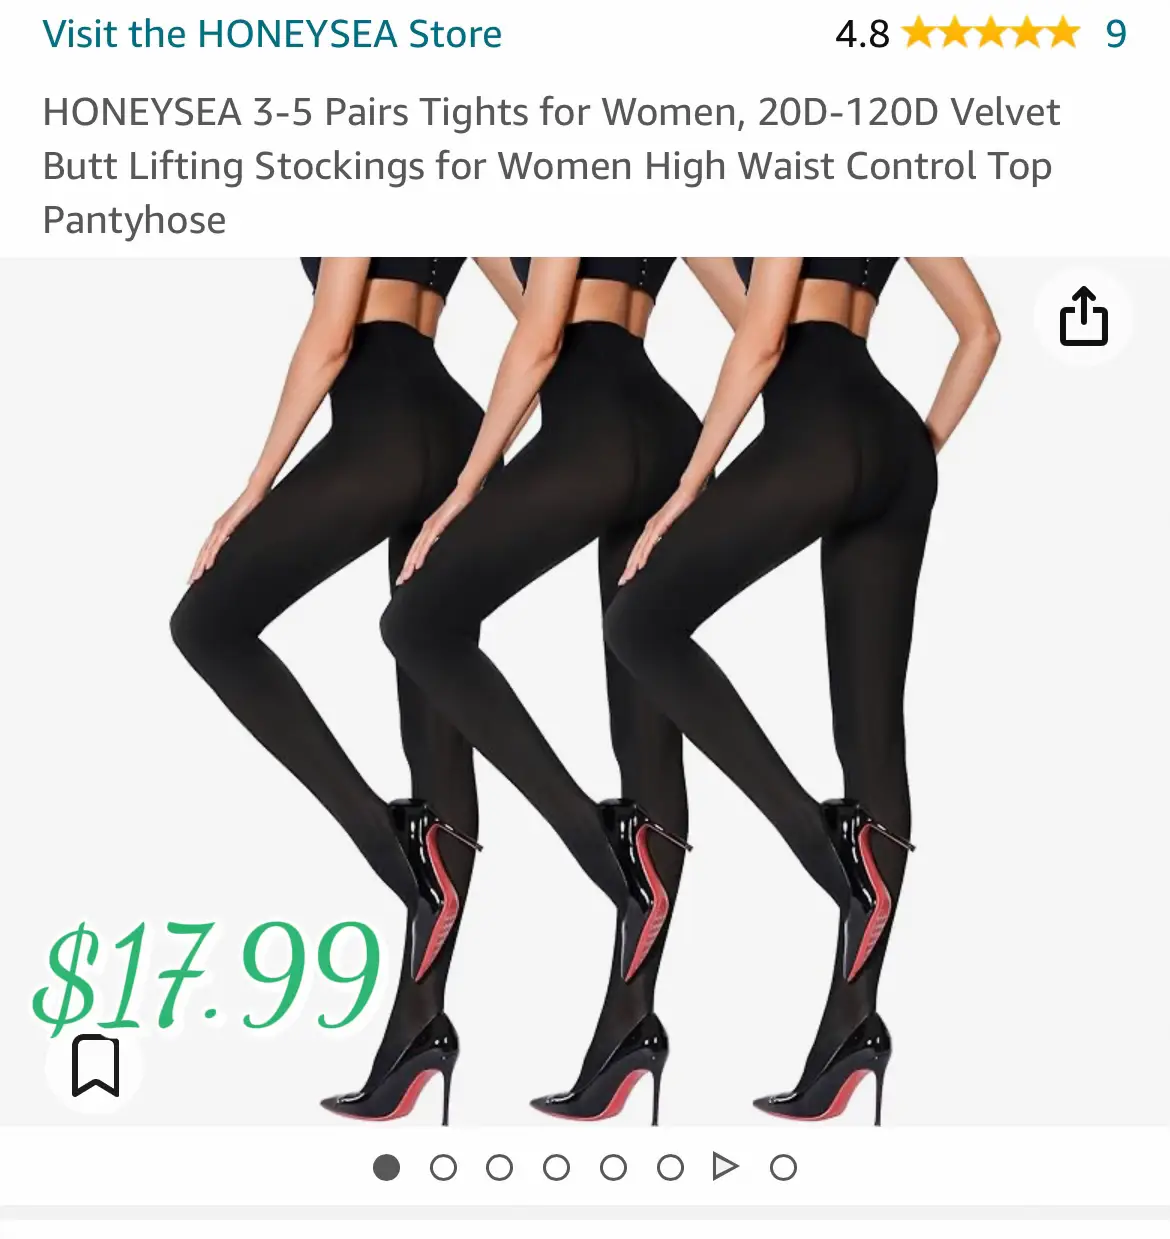 Honeysea Black Tights for Women - Black Tights Black Stockings for